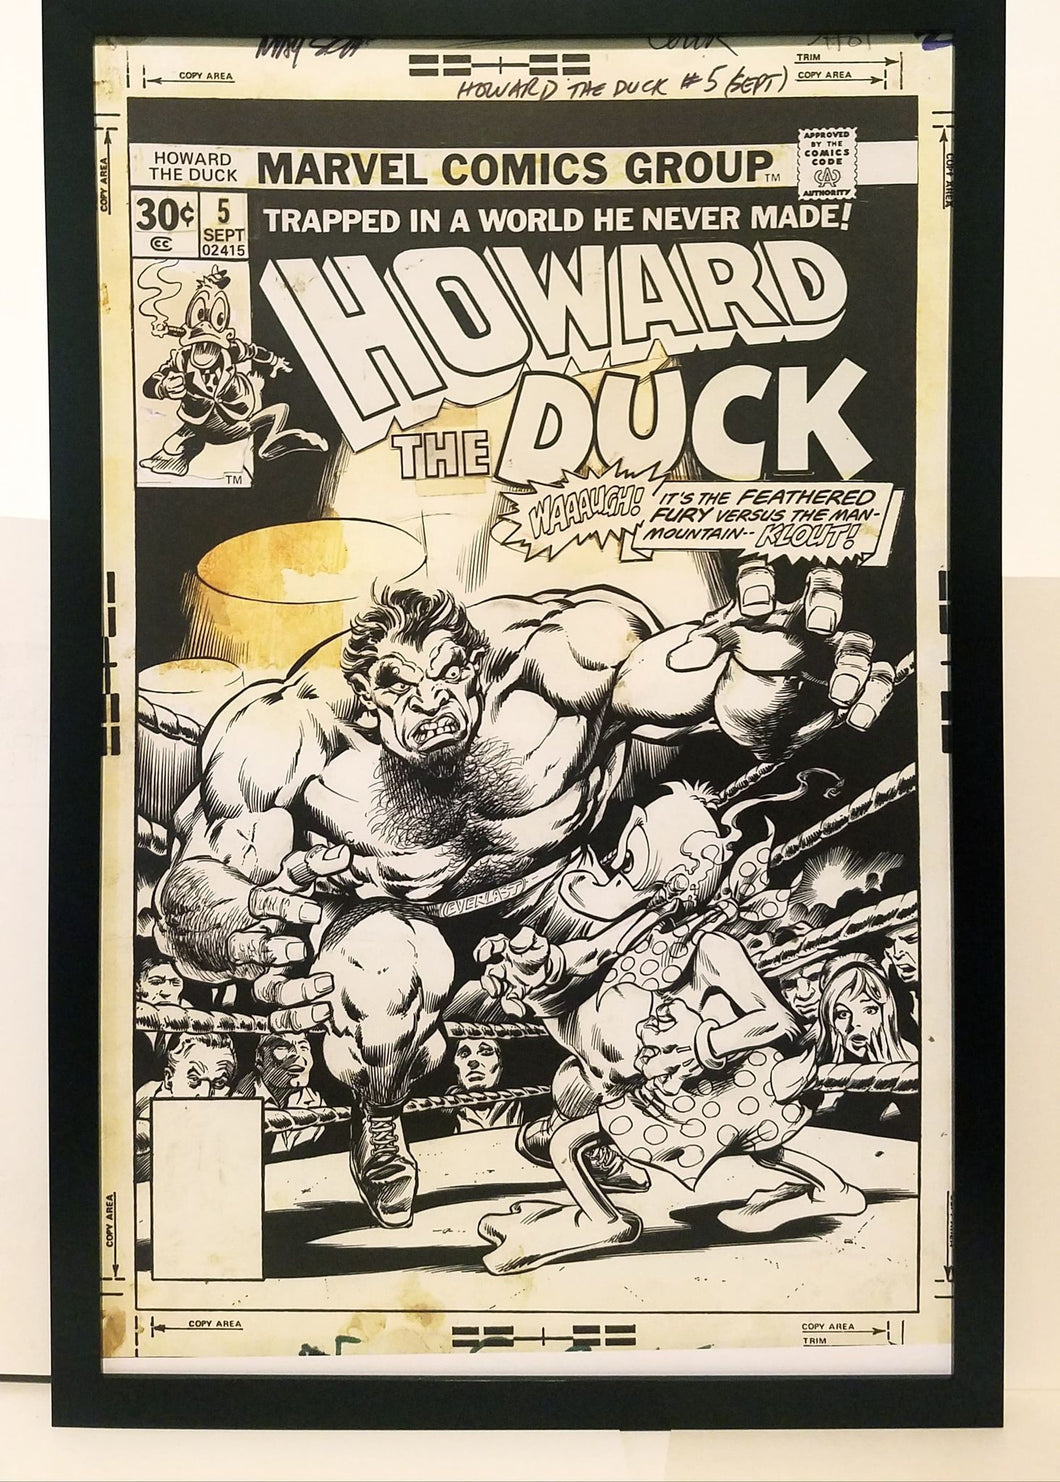 Howard the Duck #5 by Gene Colan 11x17 FRAMED Original Art Poster Marvel Comics